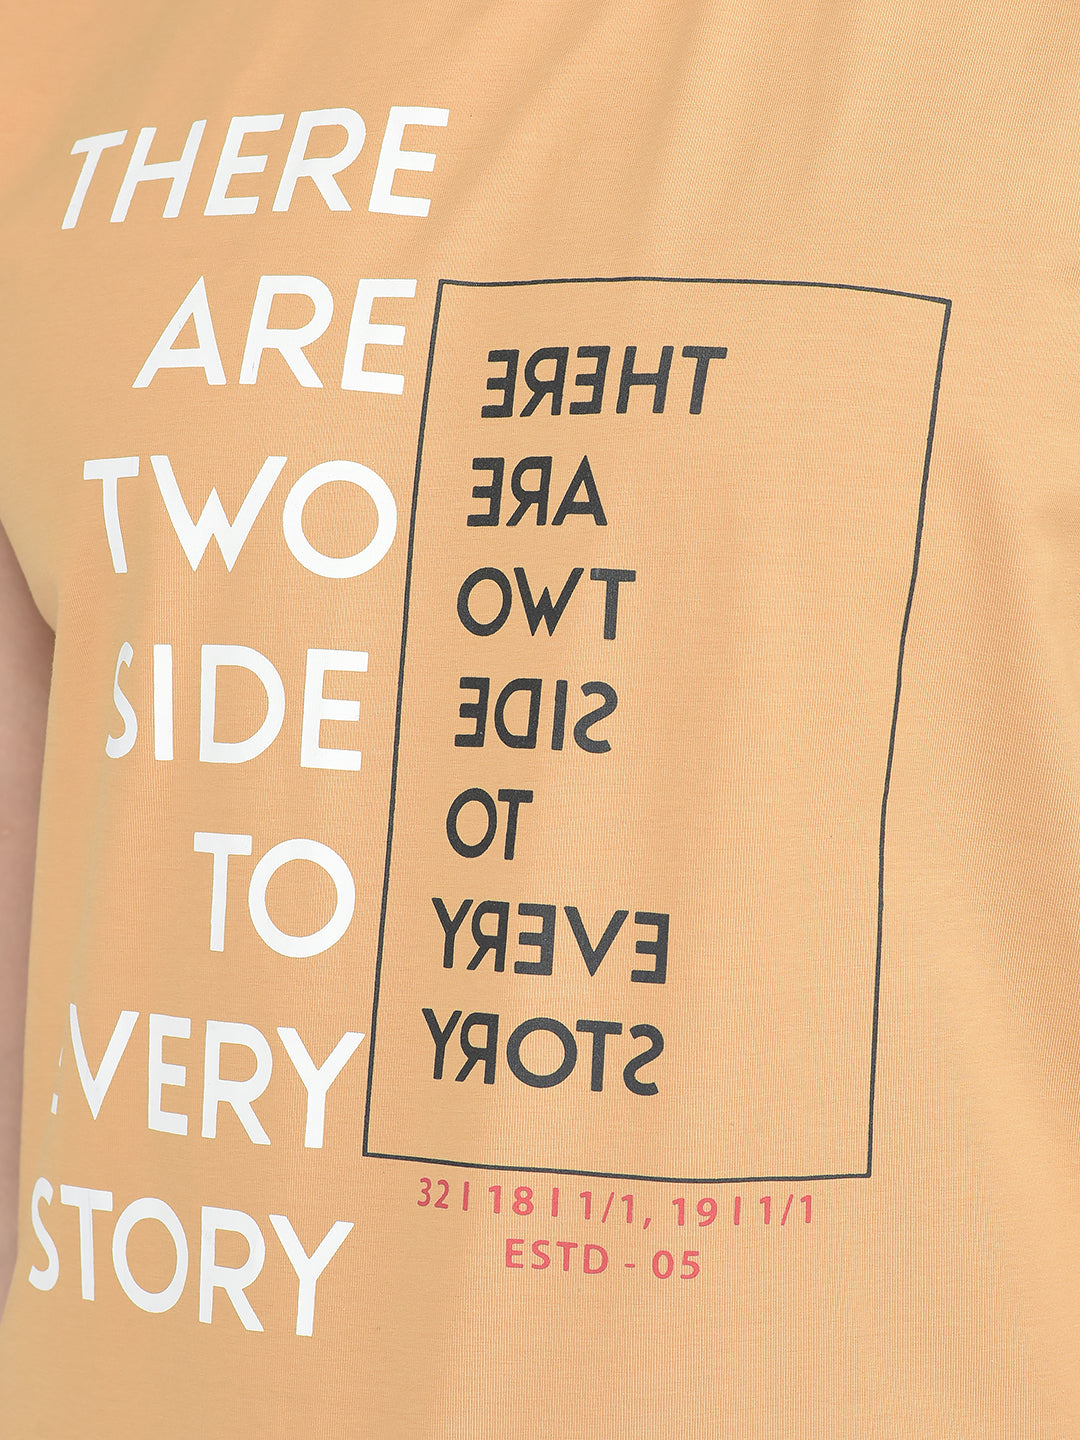  Mango Sorbet Typographic Tank T-Shirt